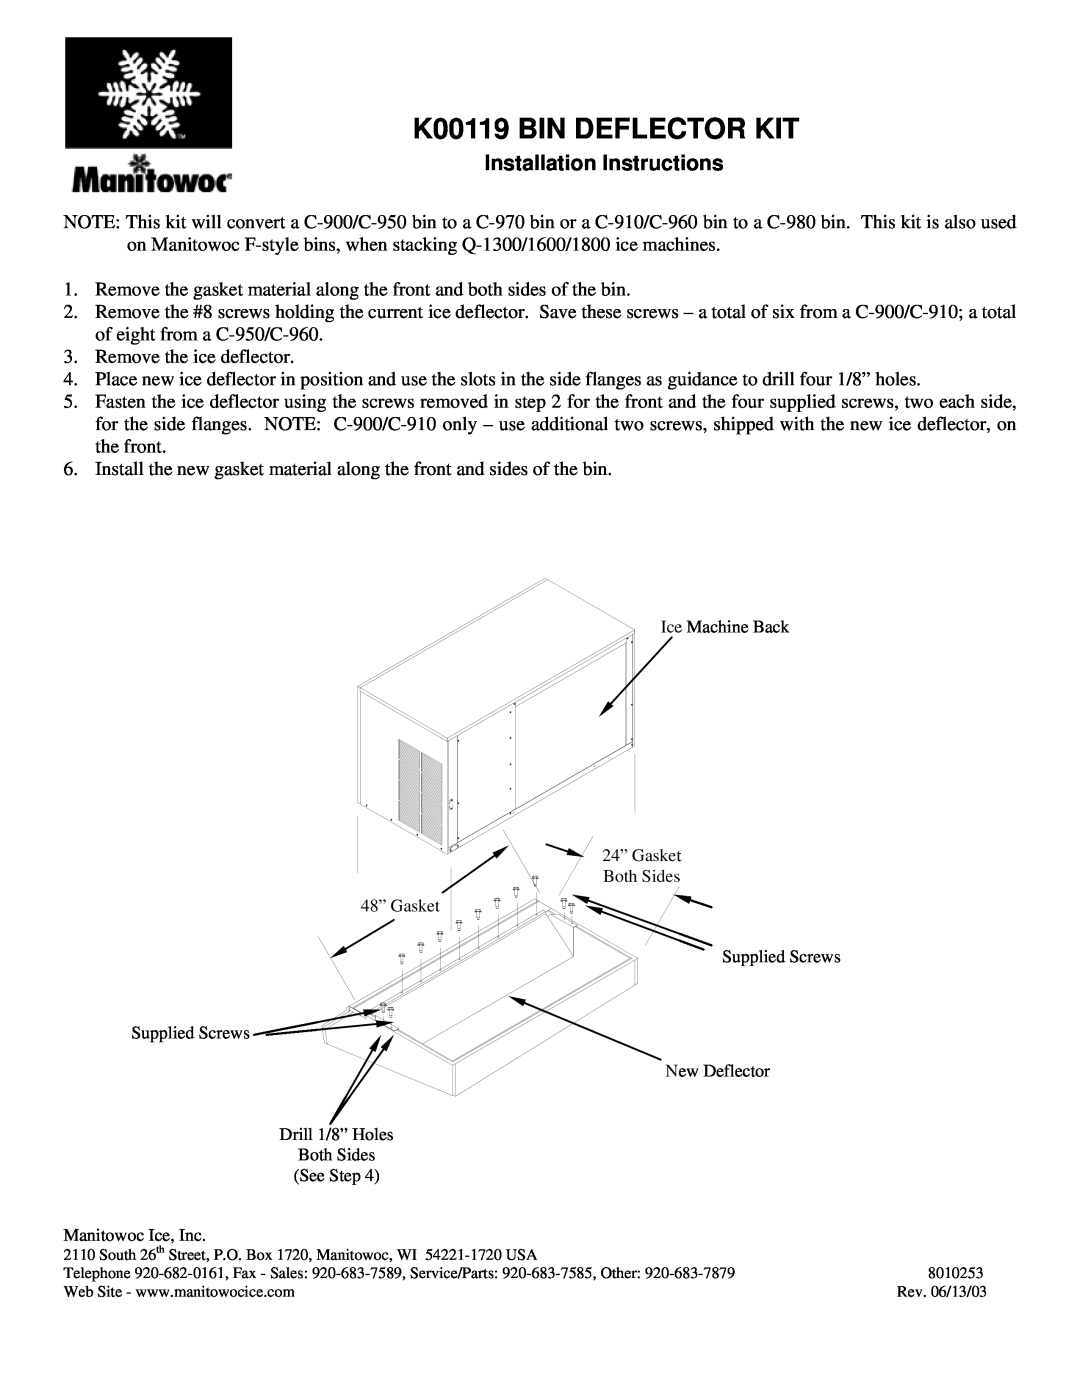 Manitowoc Ice installation instructions K00119 BIN DEFLECTOR KIT, Installation Instructions 